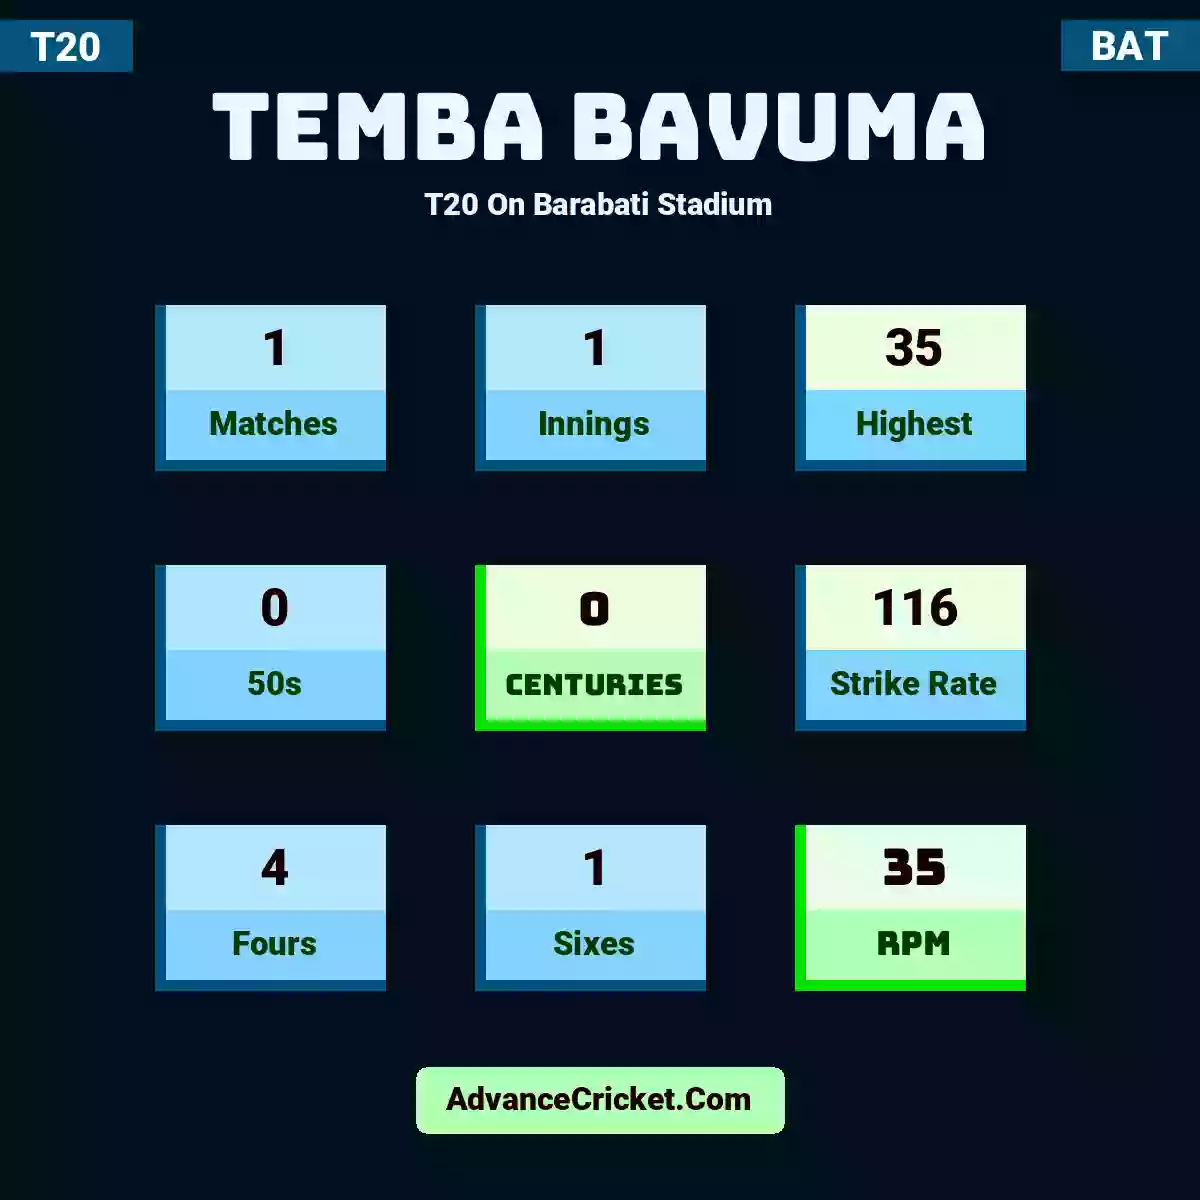 Temba Bavuma T20  On Barabati Stadium, Temba Bavuma played 1 matches, scored 35 runs as highest, 0 half-centuries, and 0 centuries, with a strike rate of 116. T.Bavuma hit 4 fours and 1 sixes, with an RPM of 35.